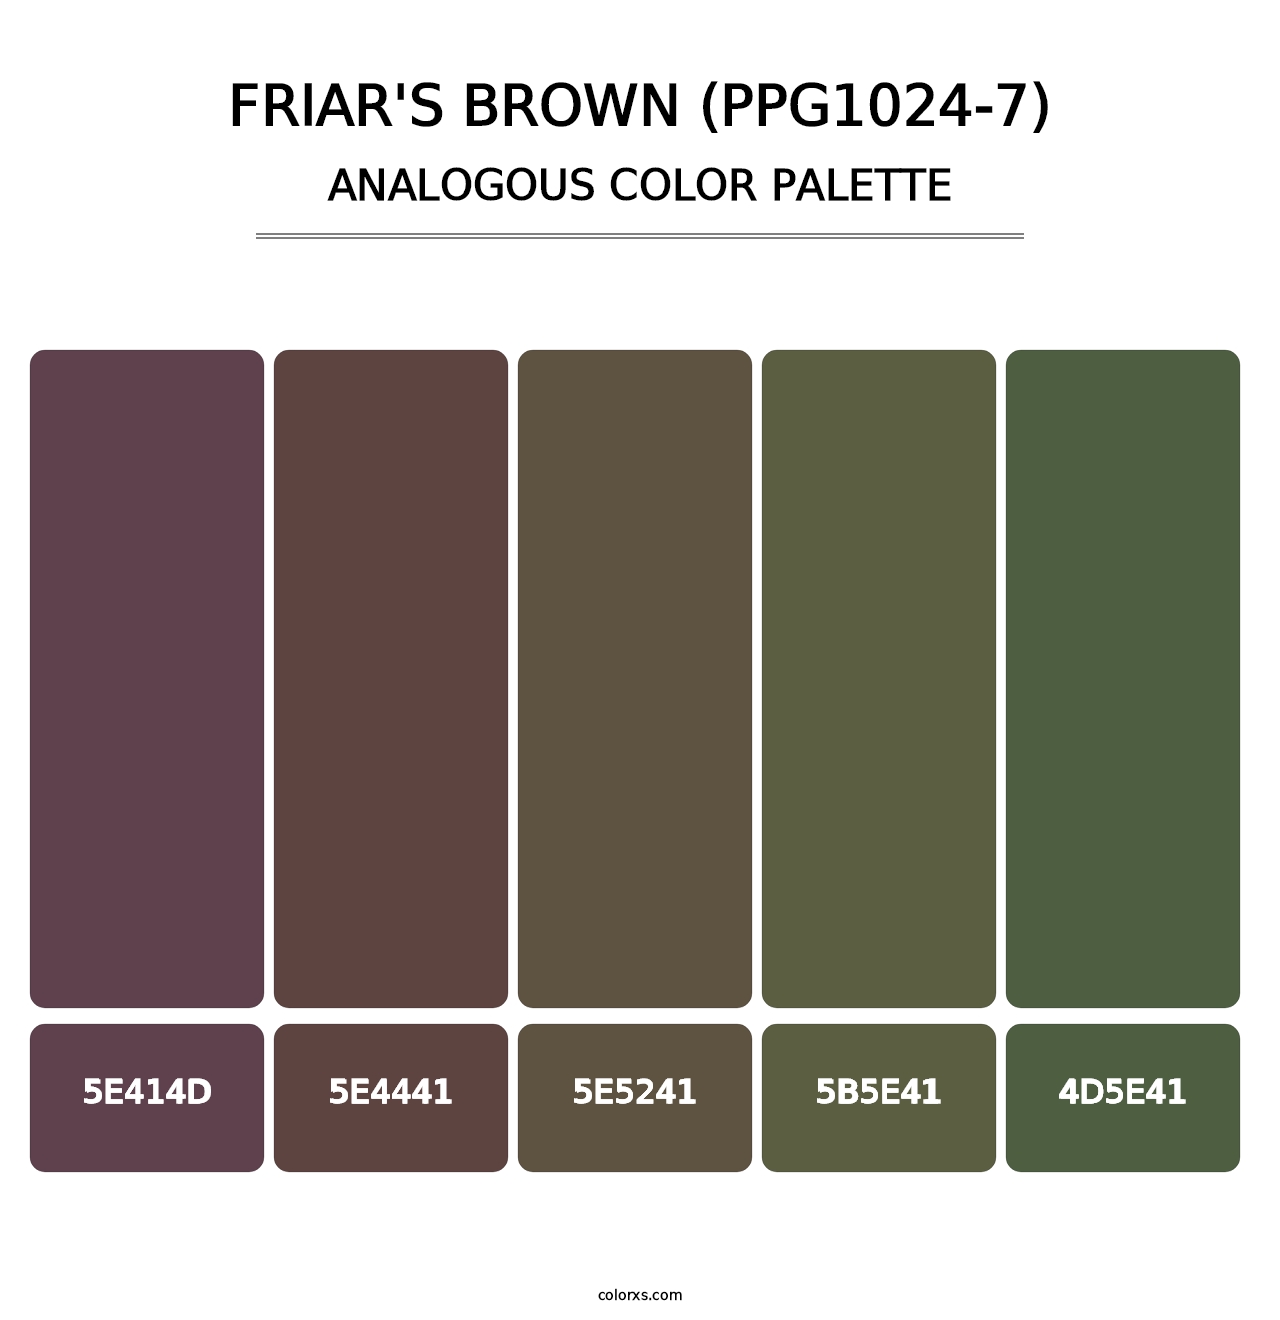 Friar's Brown (PPG1024-7) - Analogous Color Palette